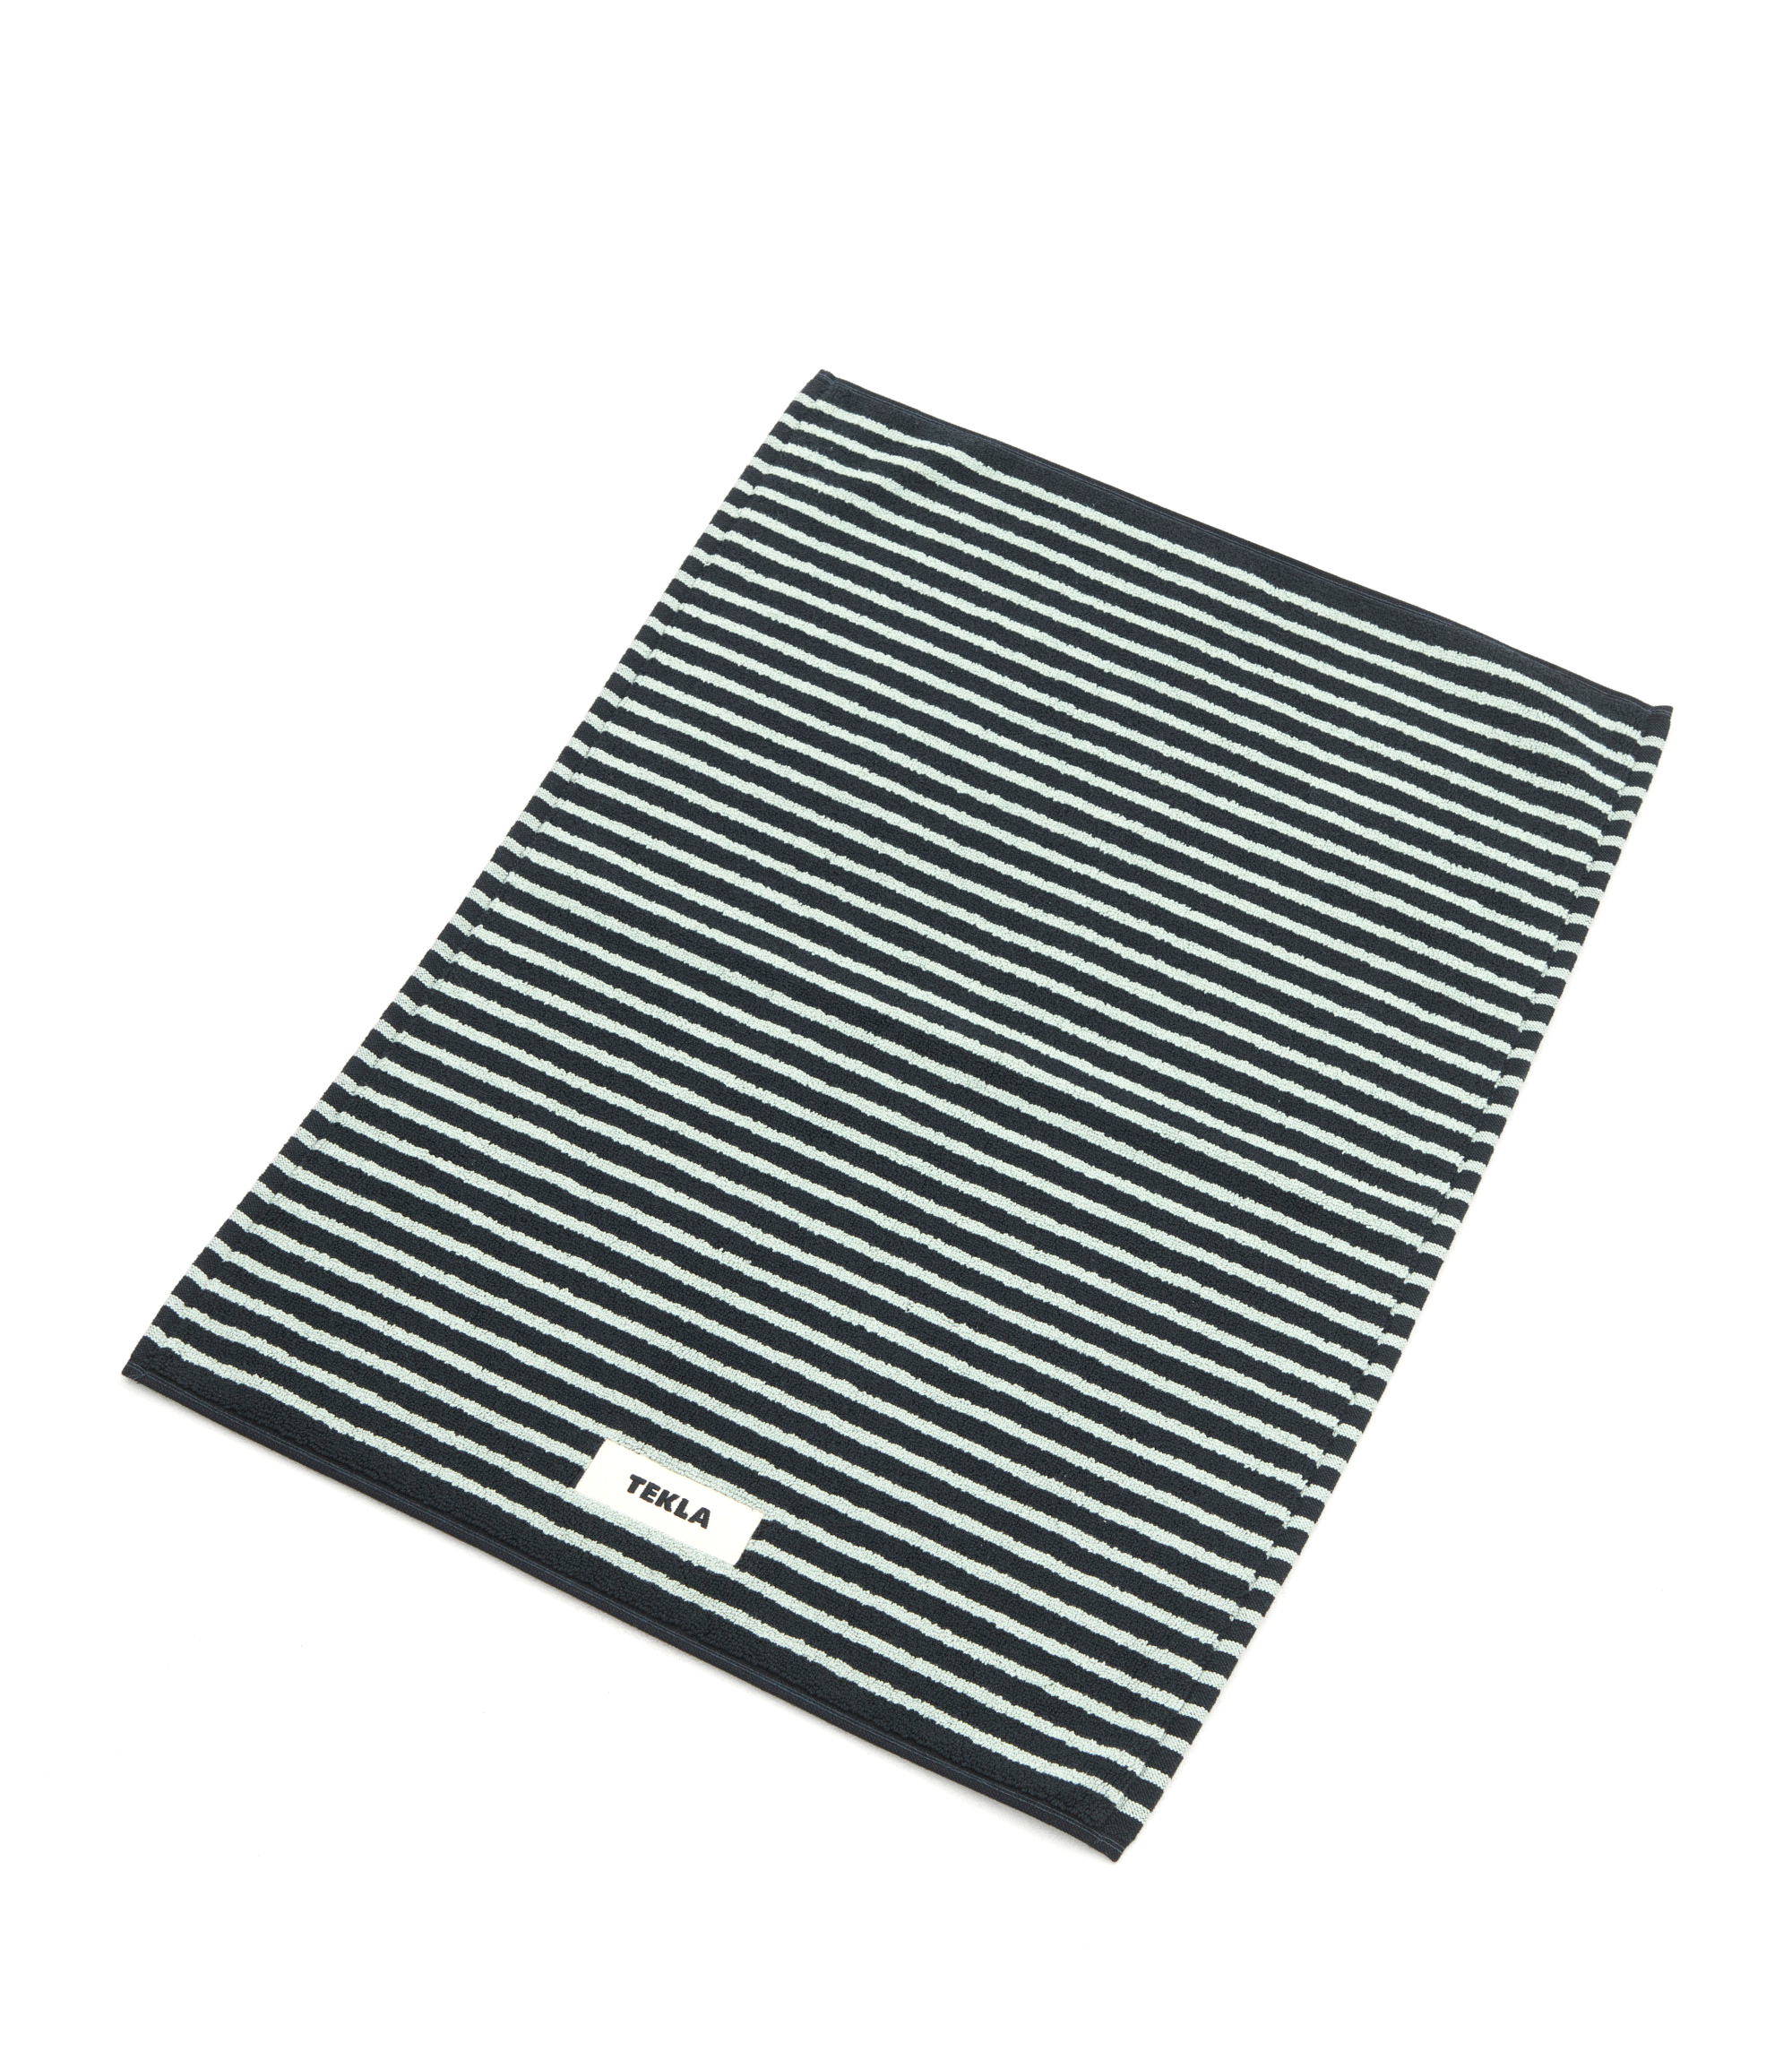 Bathmat (Striped) - Black / Mint